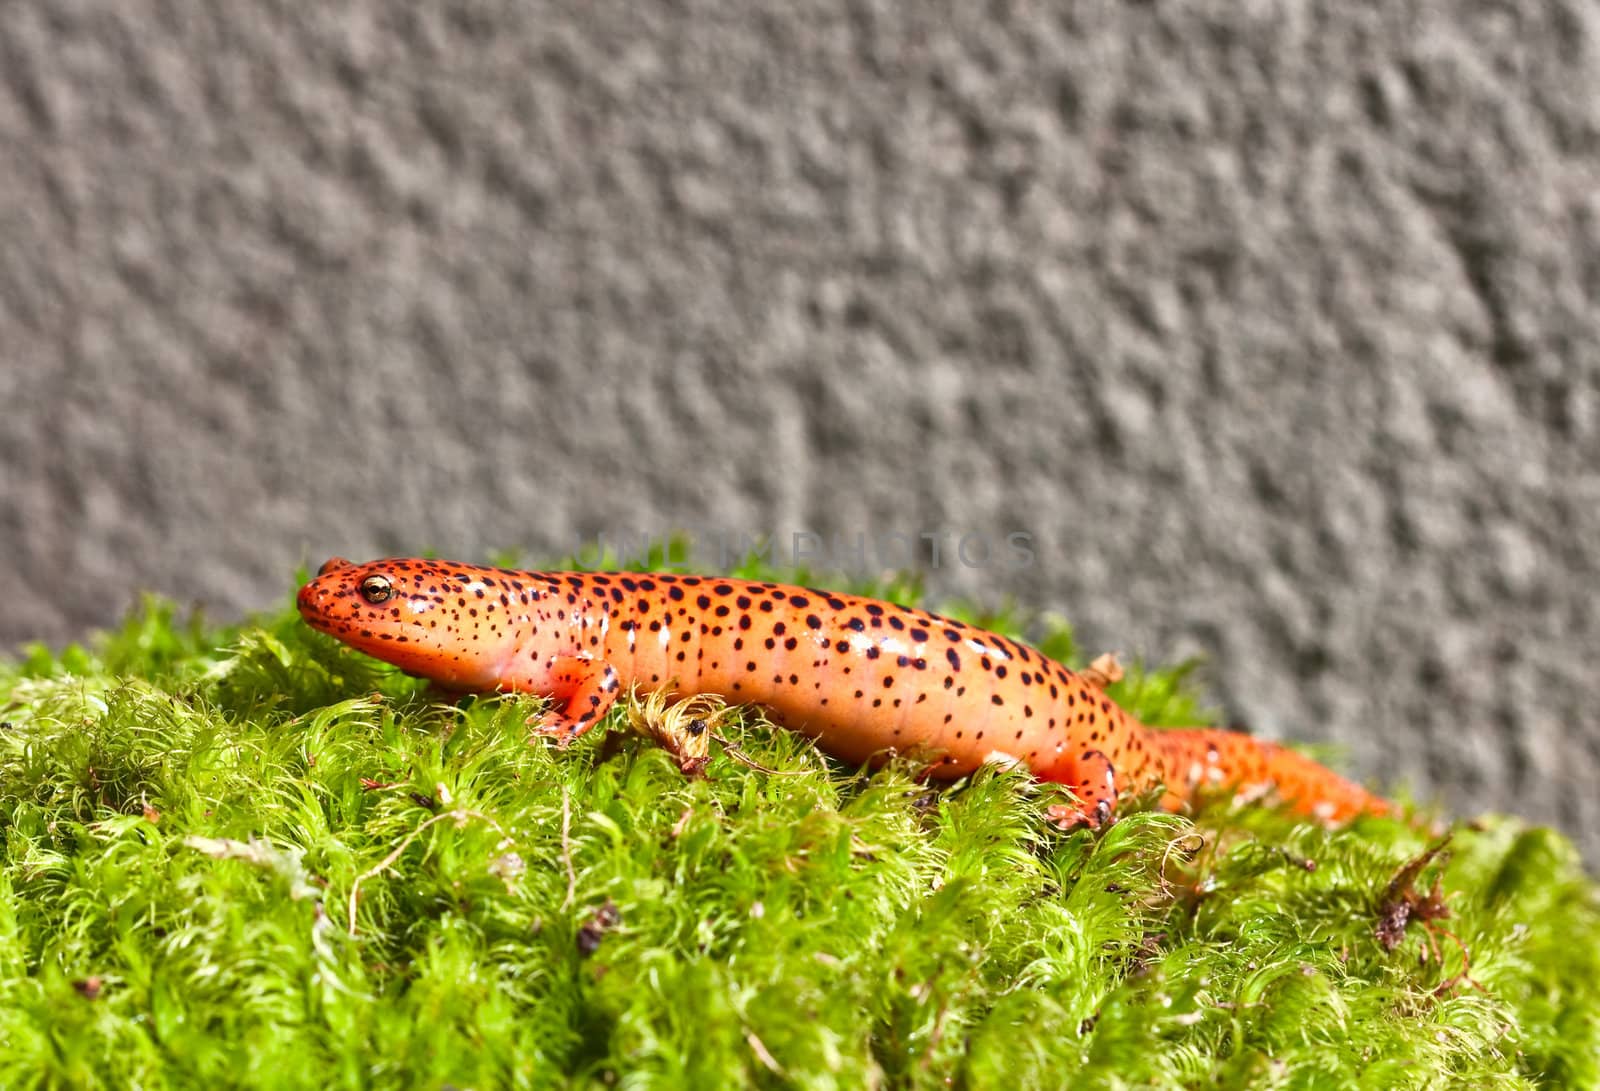 Northern Red Salamander by sbonk